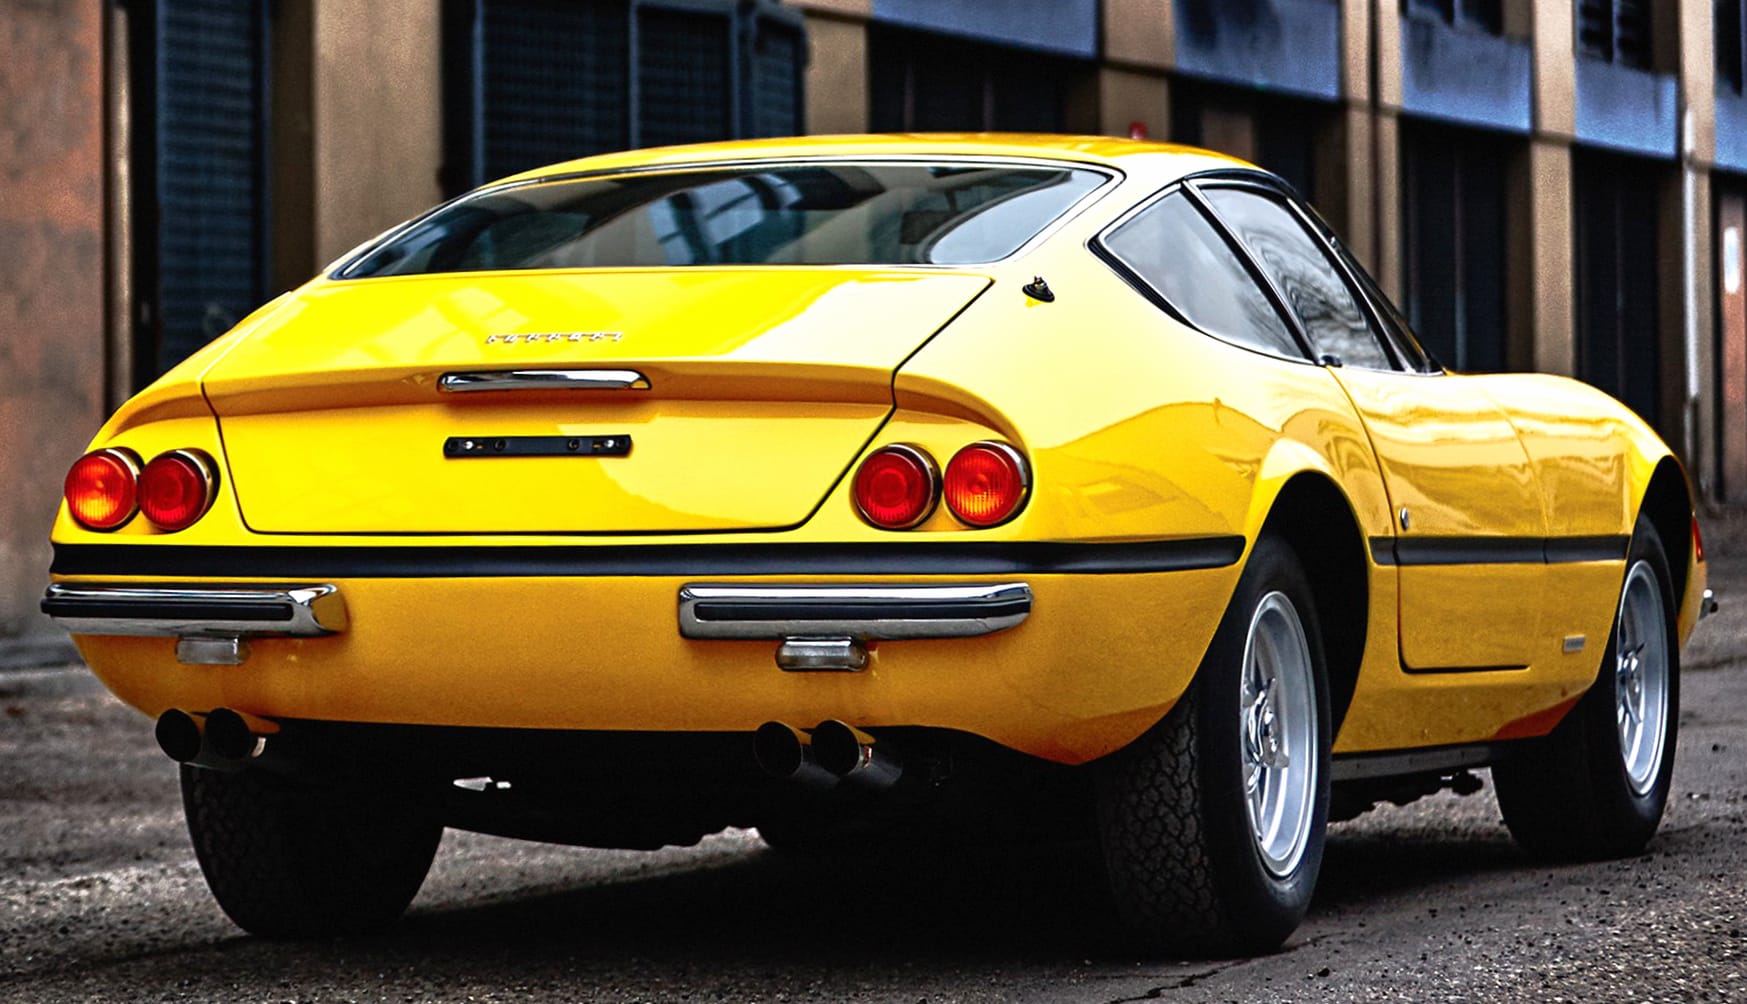 Ferrari 365 GTB 4 Daytona at 640 x 1136 iPhone 5 size wallpapers HD quality